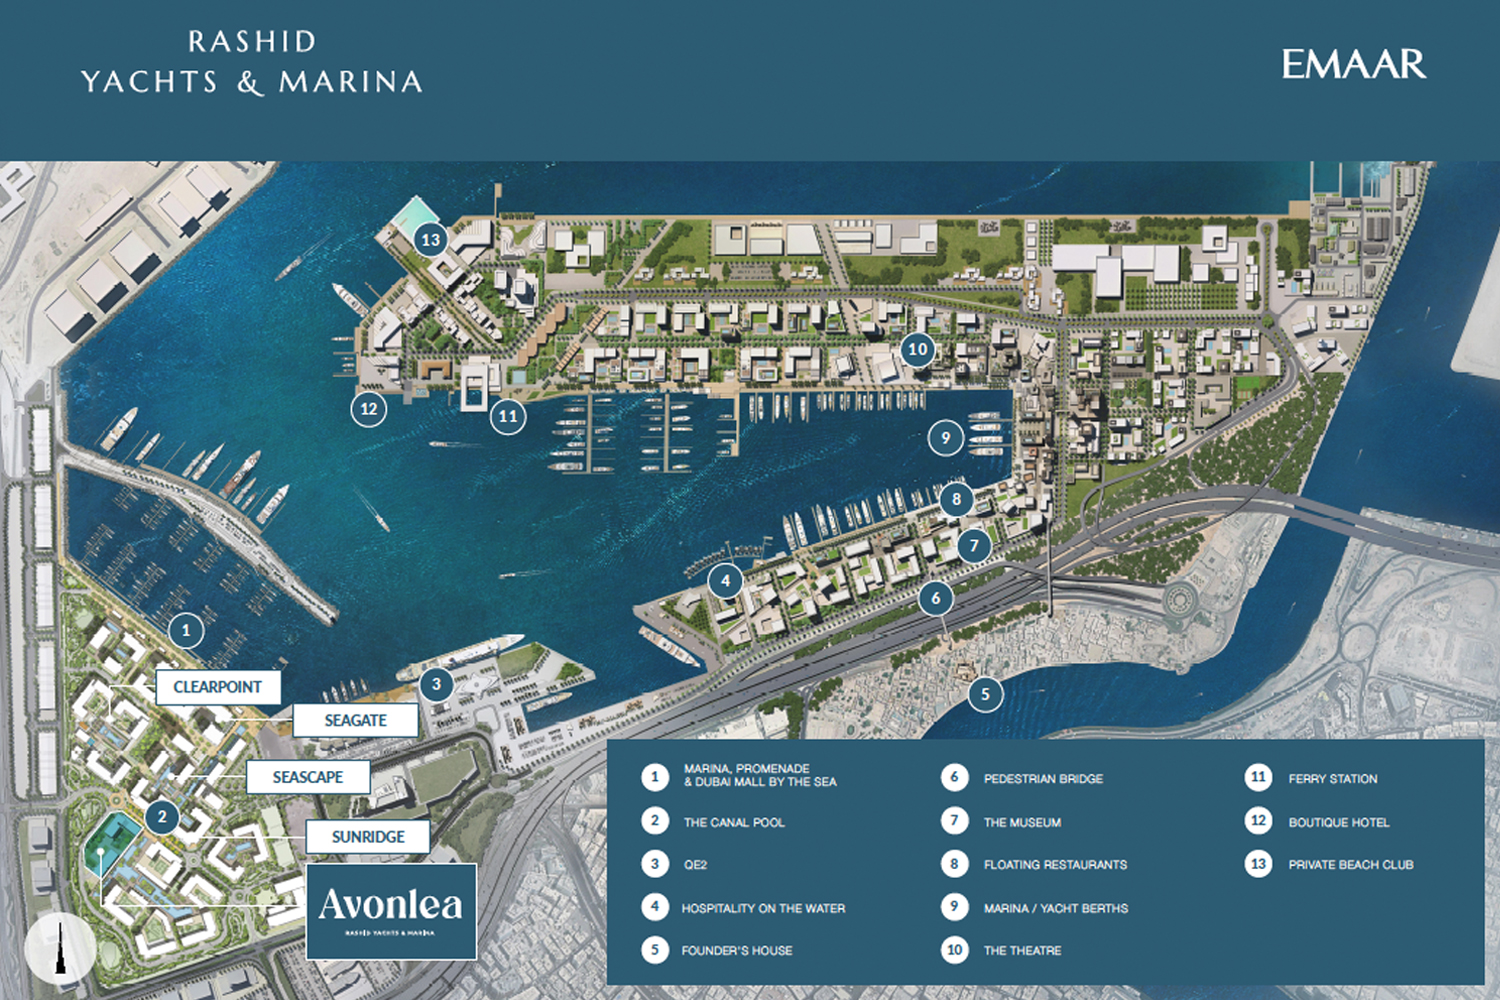 latest-project-in-dubai-avonlea-for-sale-in-rashid-yachts-and-marina